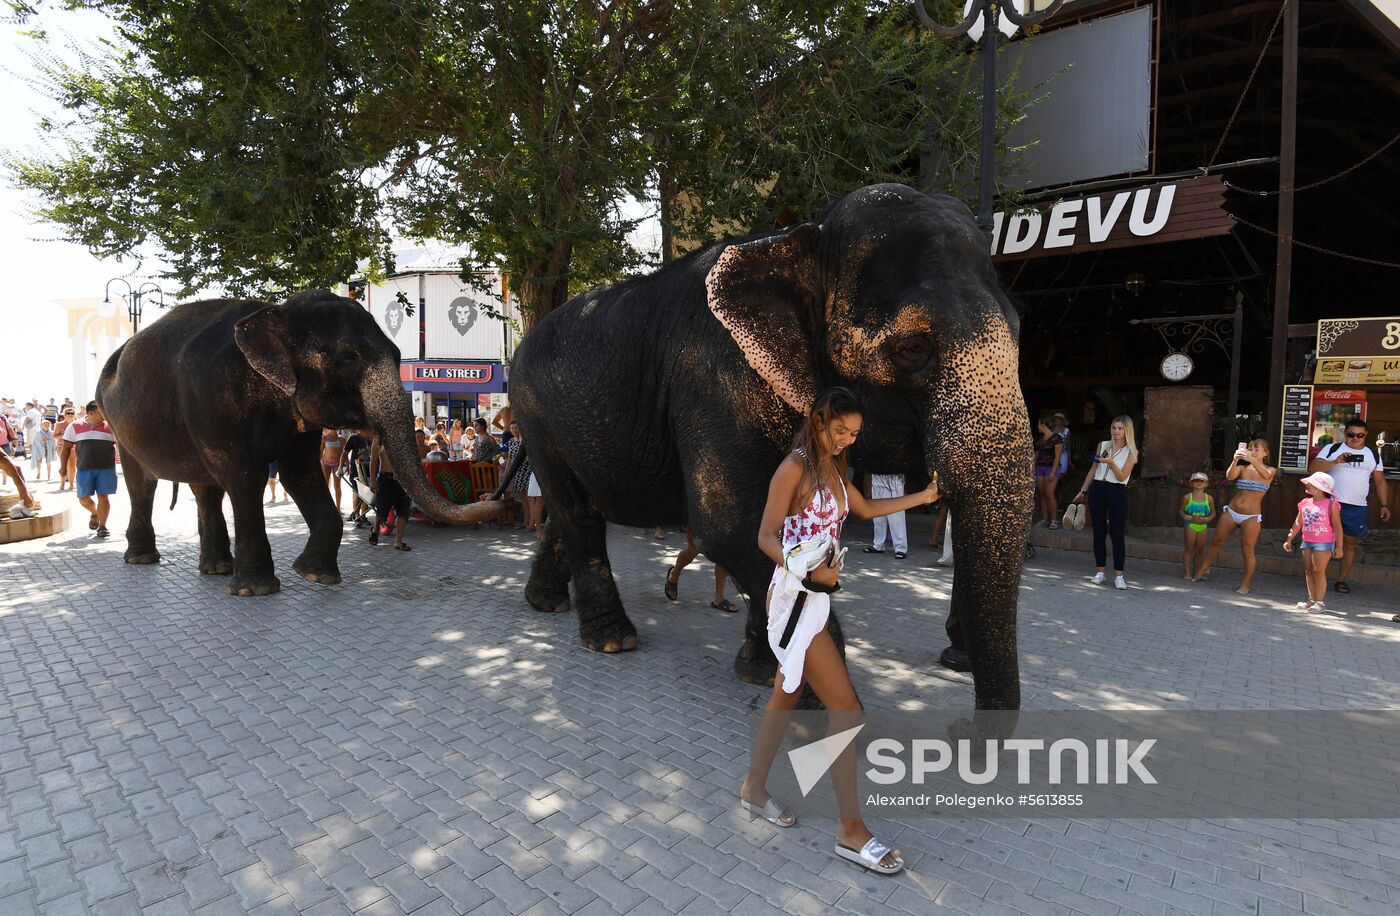 Walking and washing circus elephants in Yevpatoria